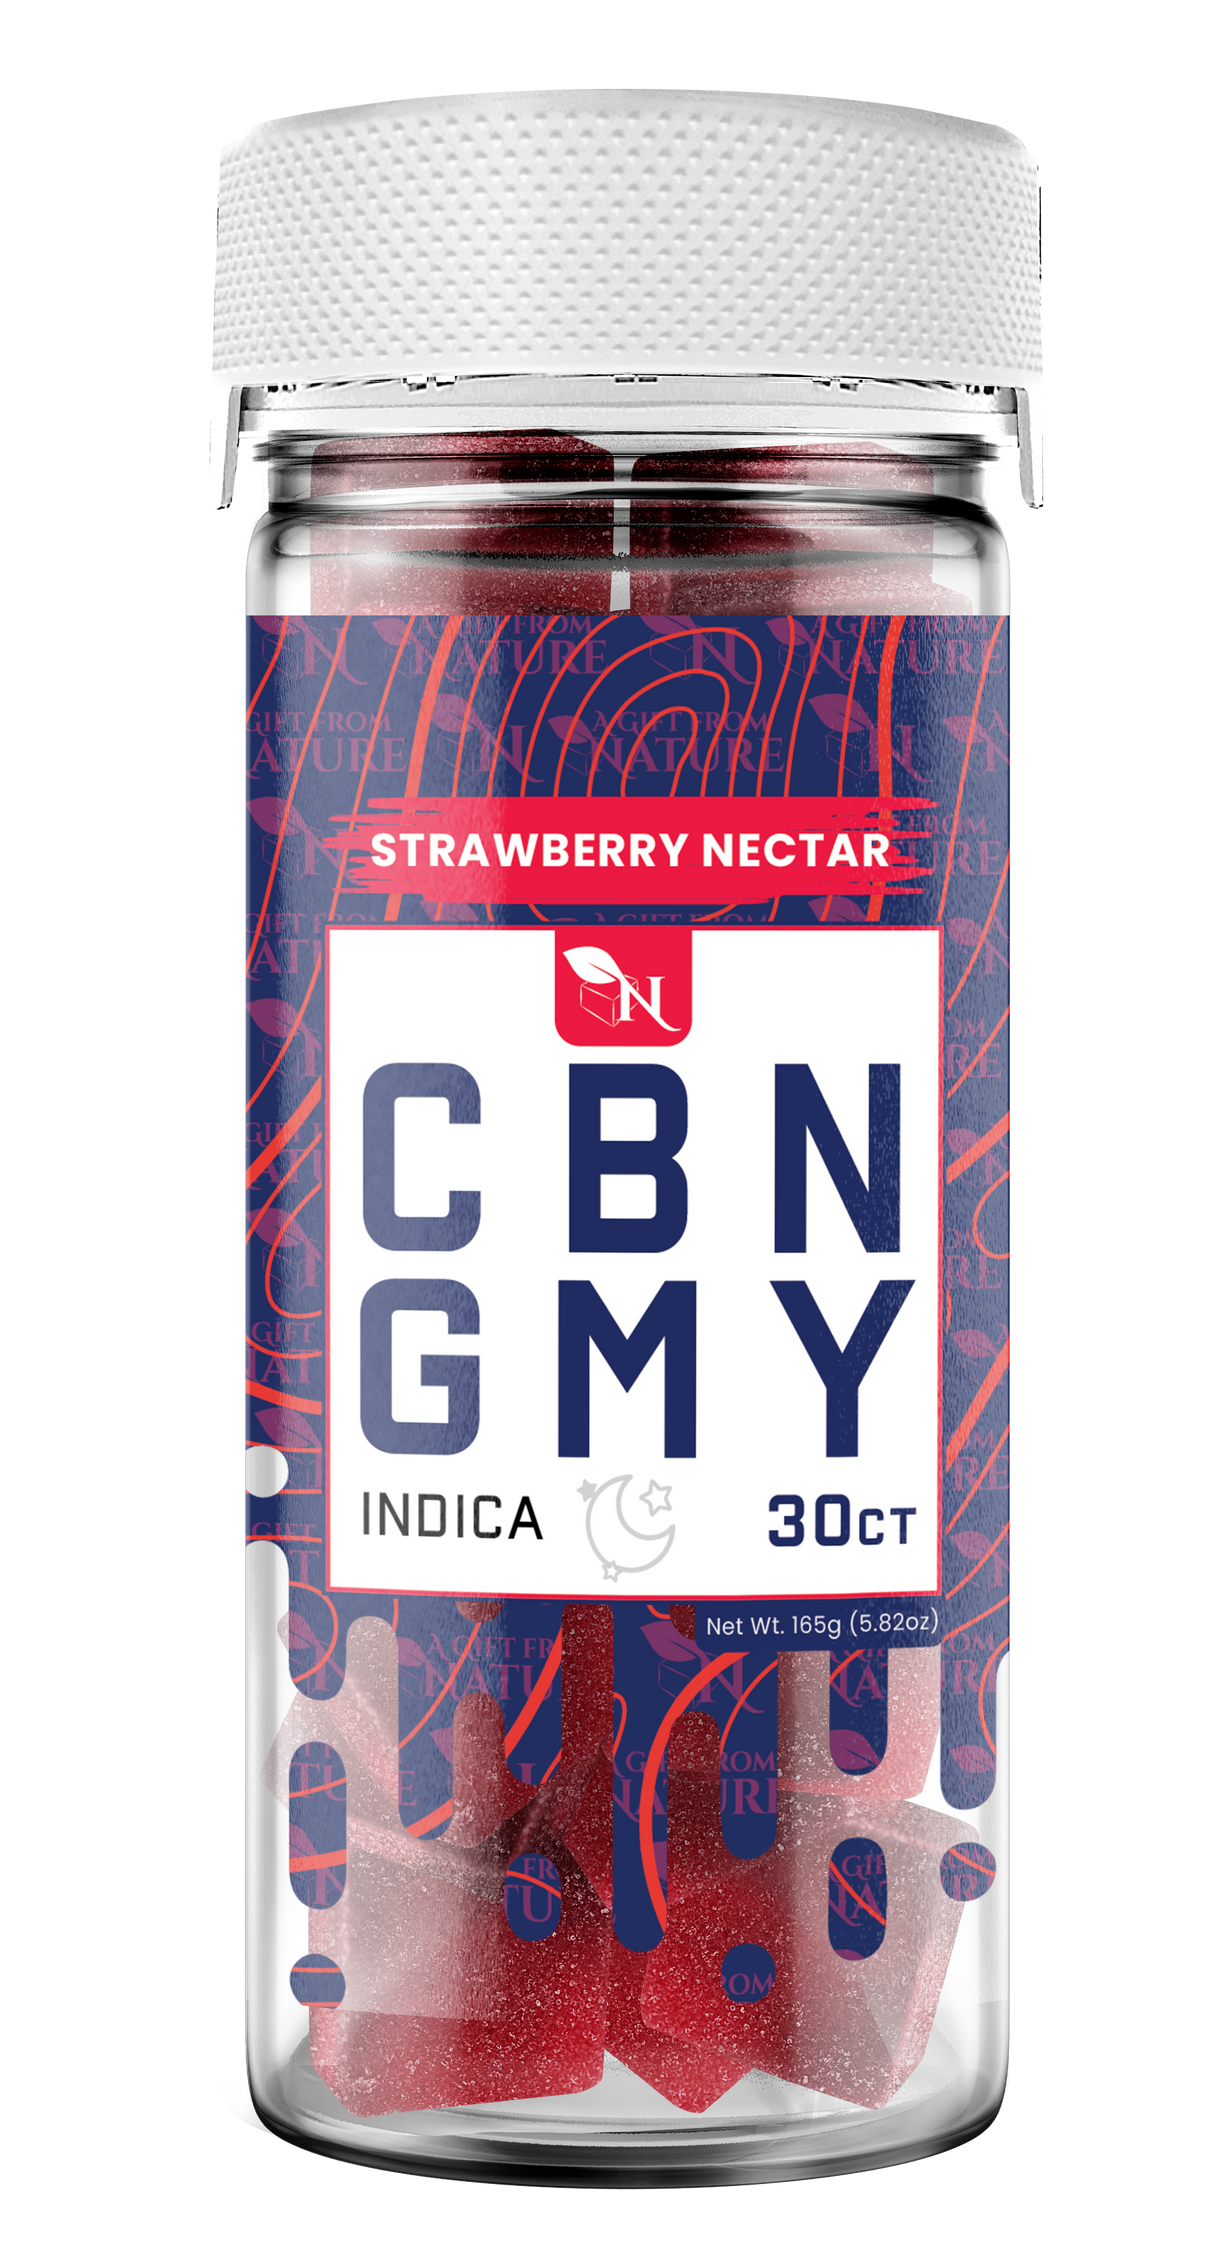 AGFN CBN Gummy: Strawberry Nectar Indica (1500MG)